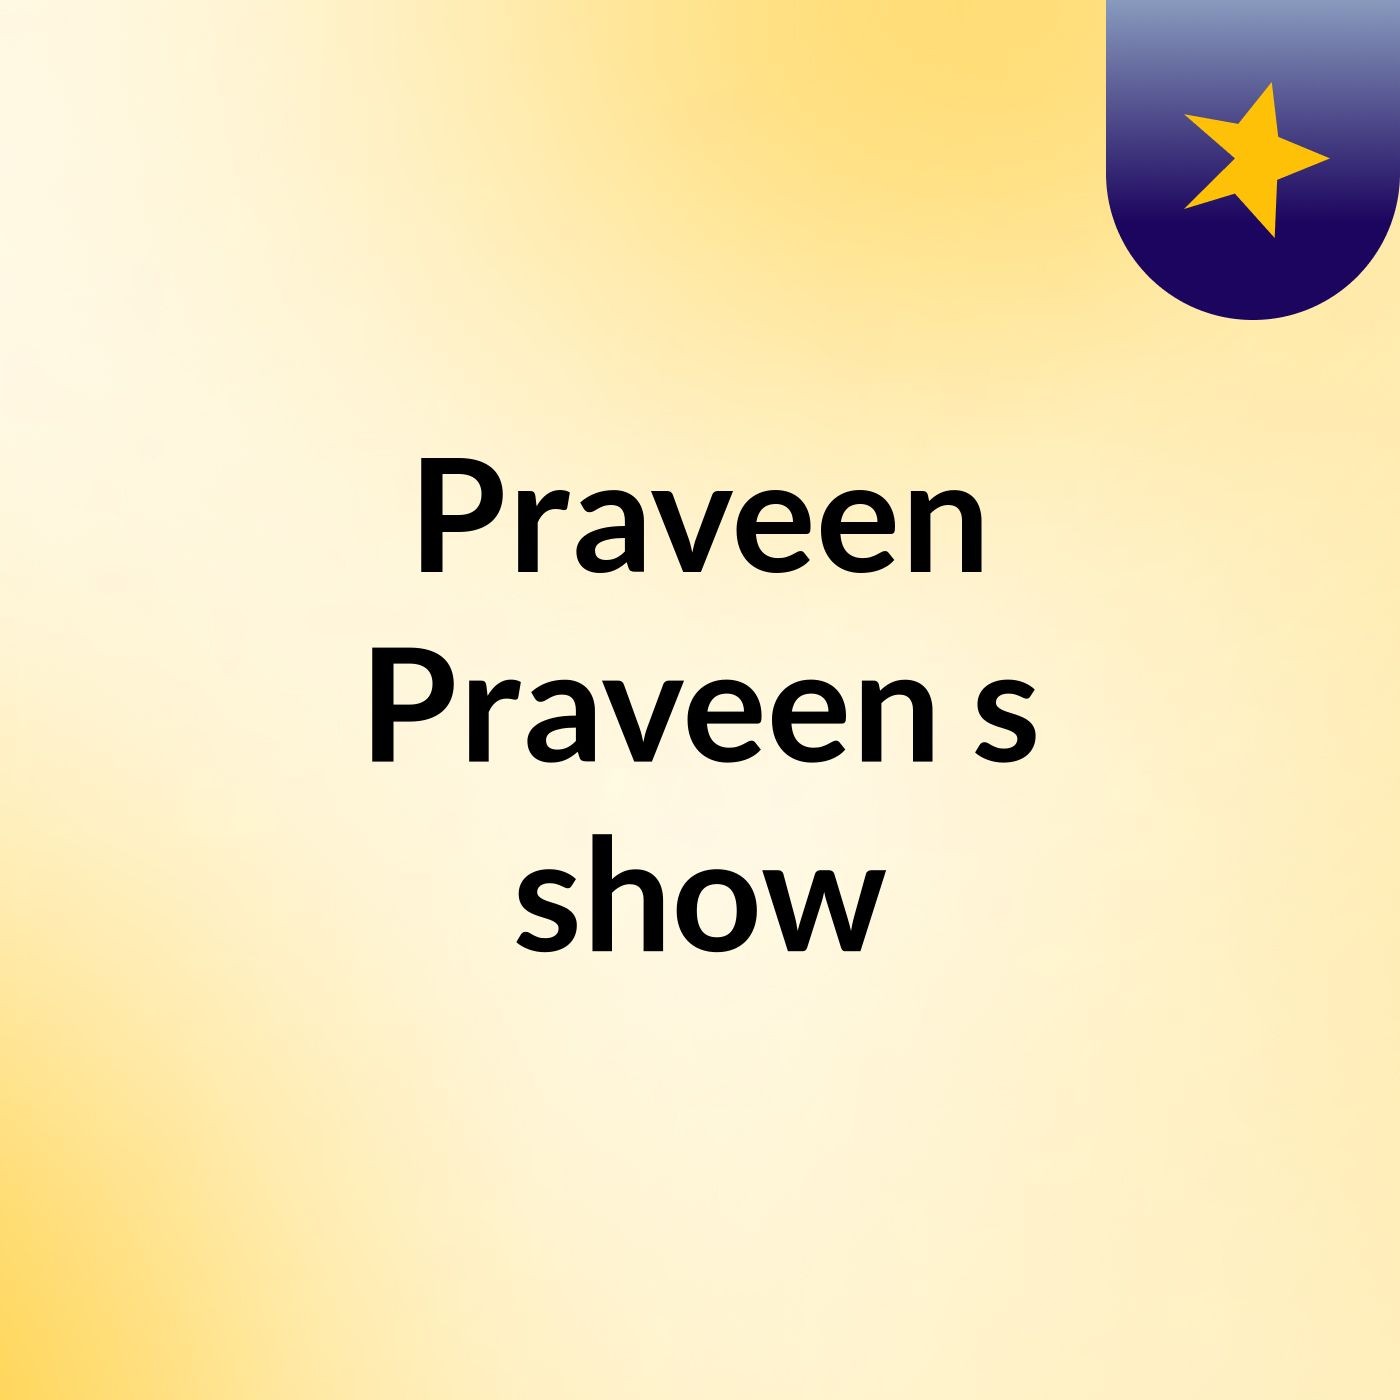 Episode 2 - Praveen Praveen's show